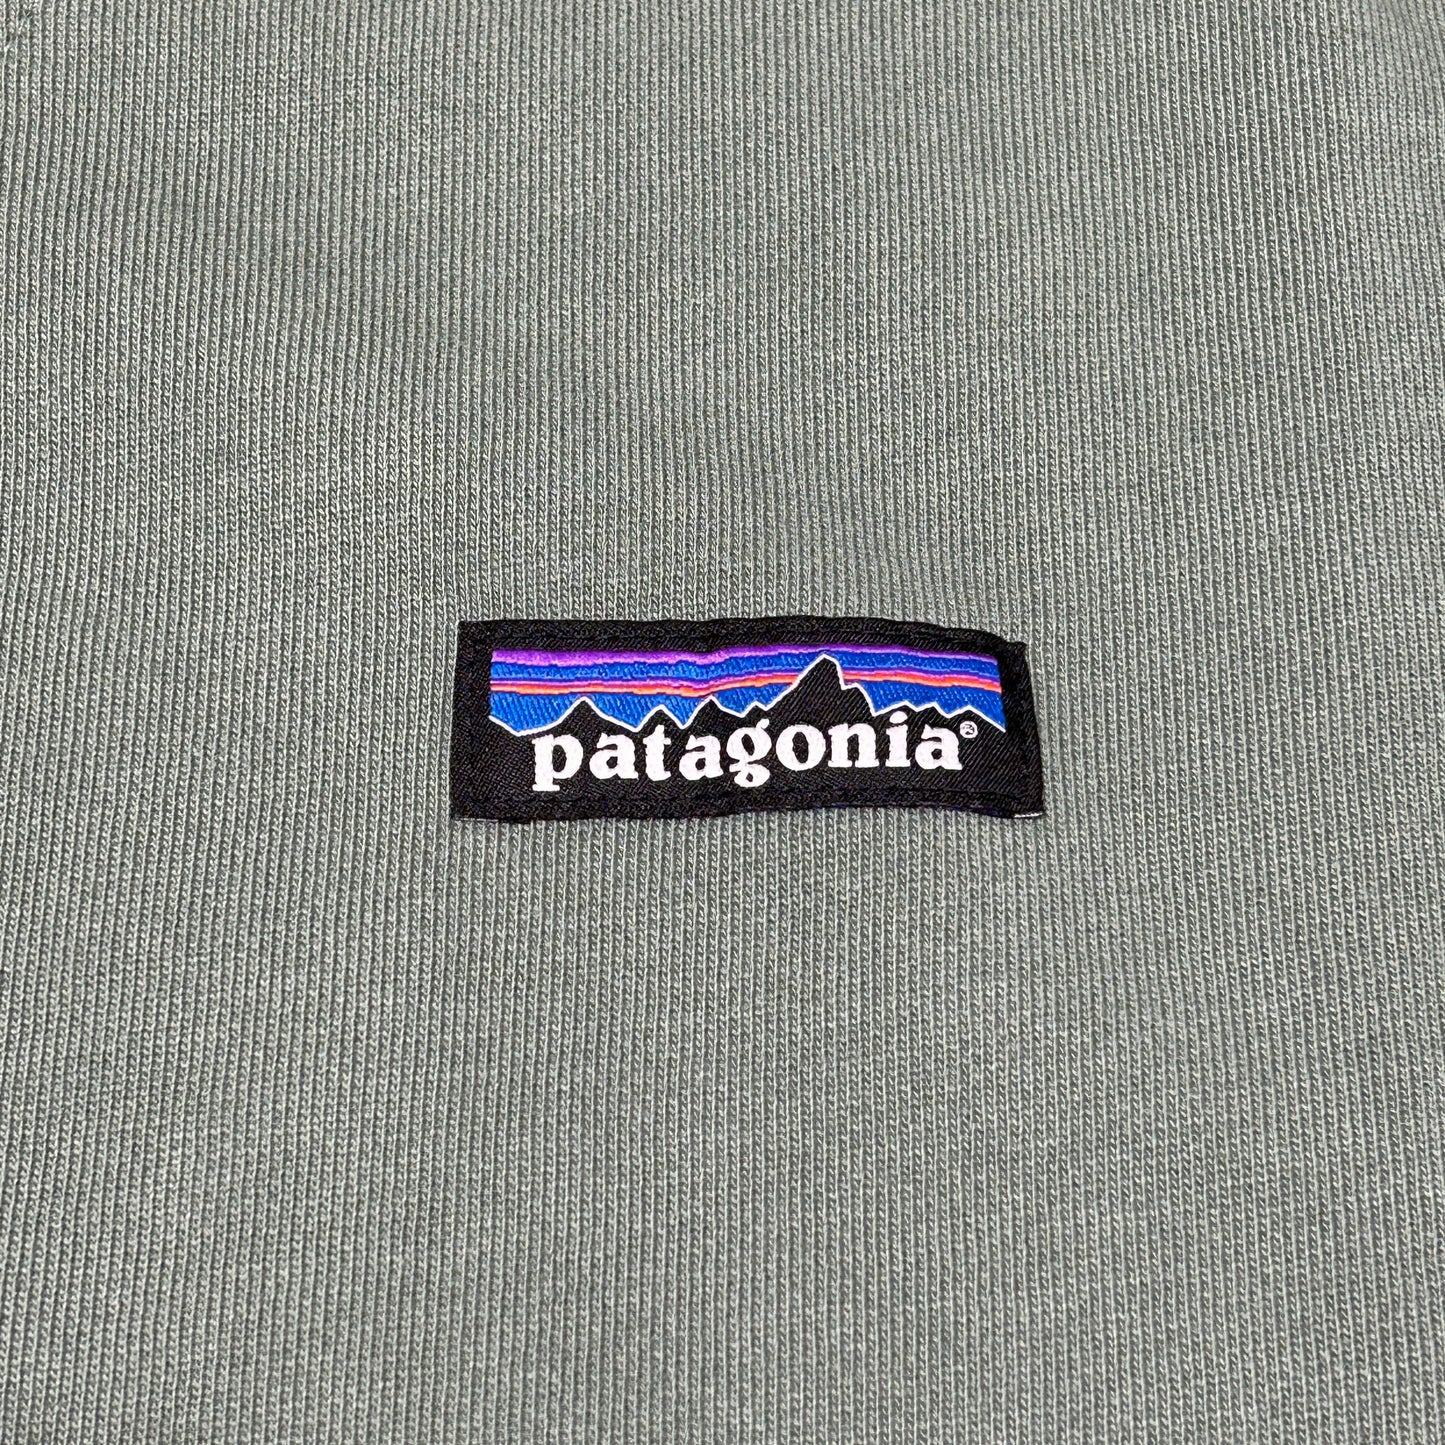 PATAGONIA Regenerative Organic Cotton Hoody Sweatshirt Sz M Hemlock Green (New)